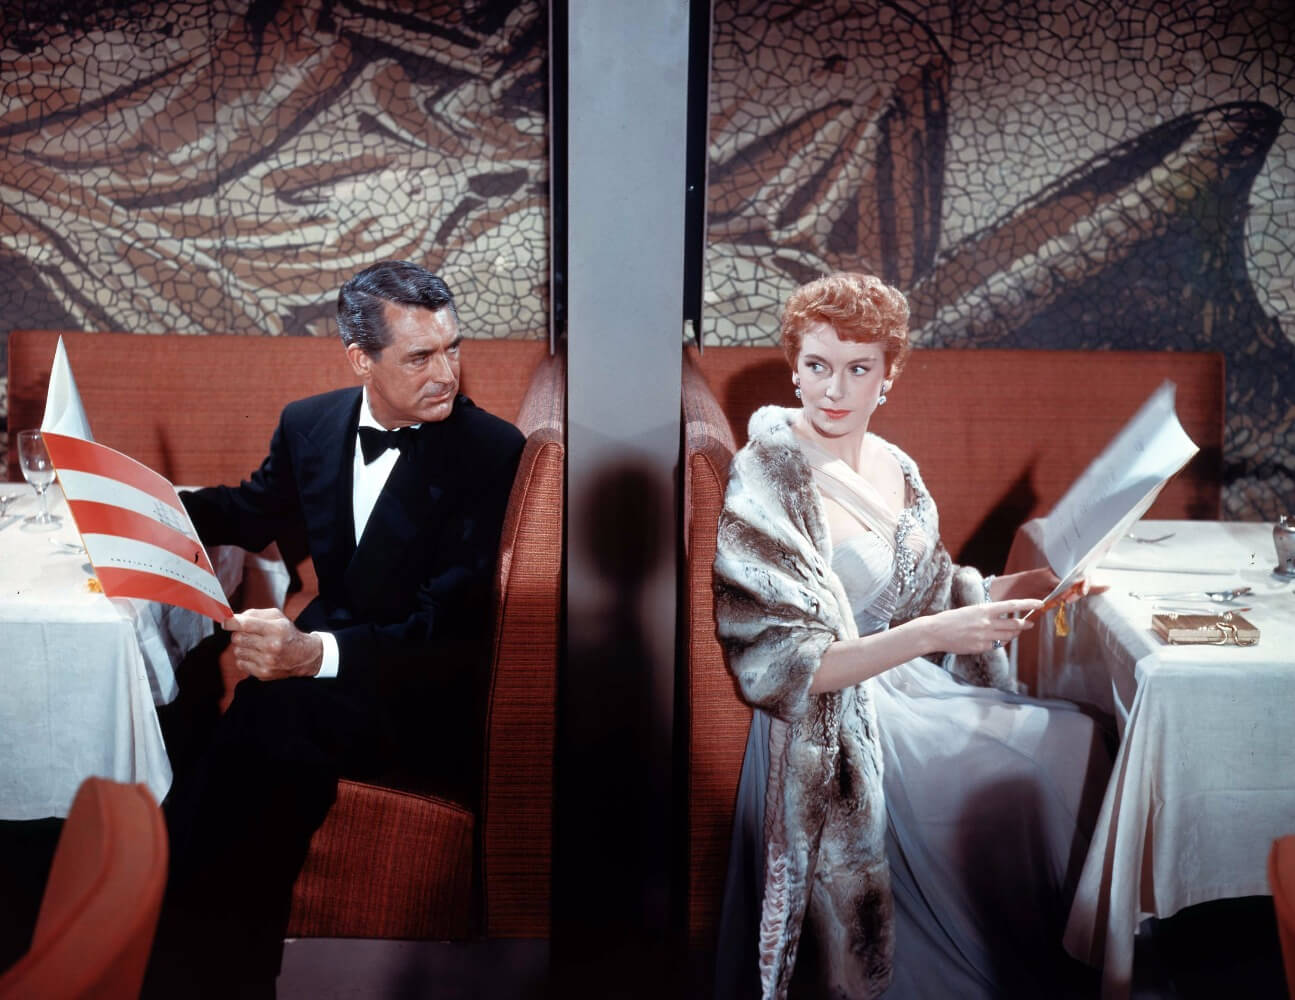 An affair to remember(film, 1957) starring Cary Grant and Deborah Kerr/Elle et Lui(film, 1957)